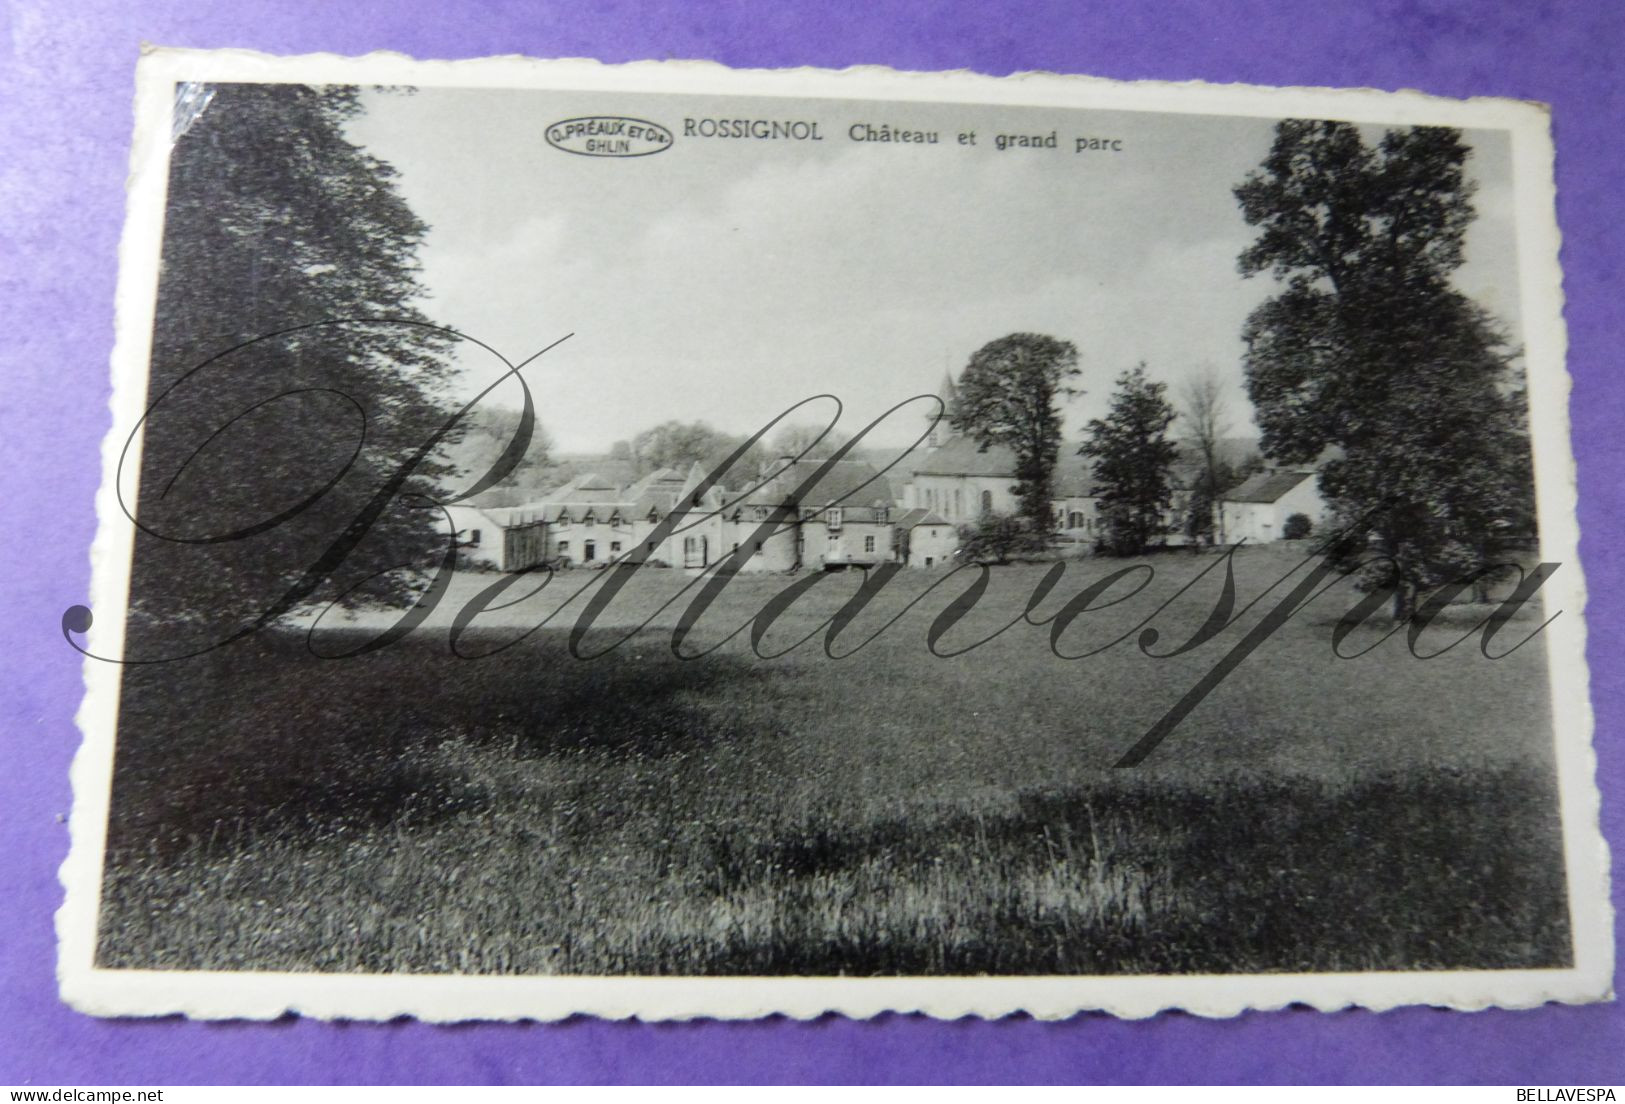 Rossignol Chateau Et Parc 1963 - Tintigny